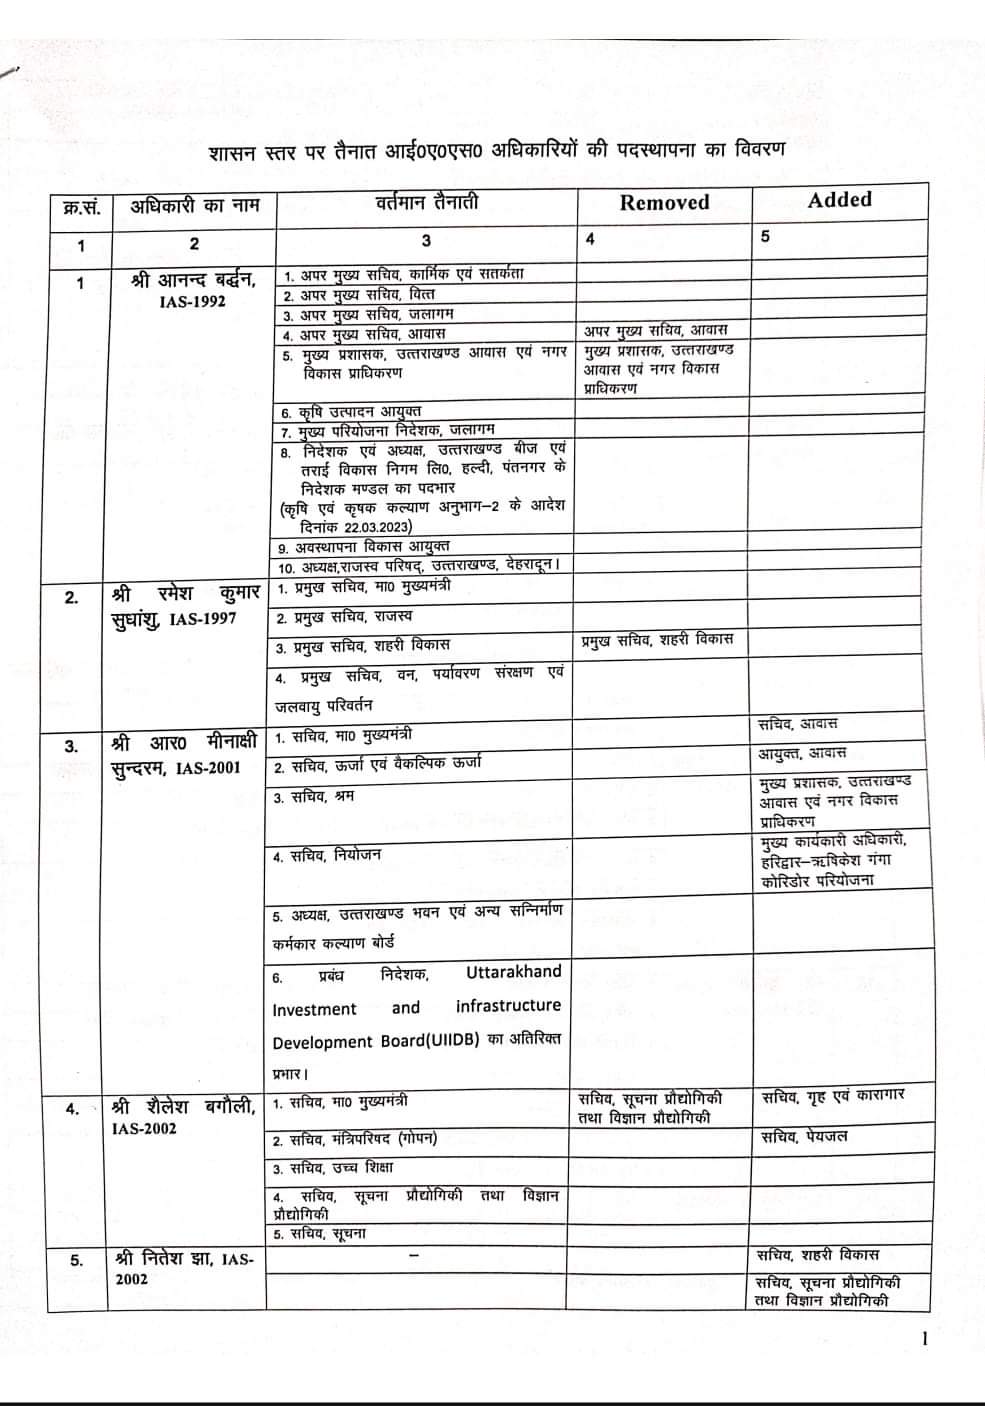 Administrative reshuffle in Uttarakhand